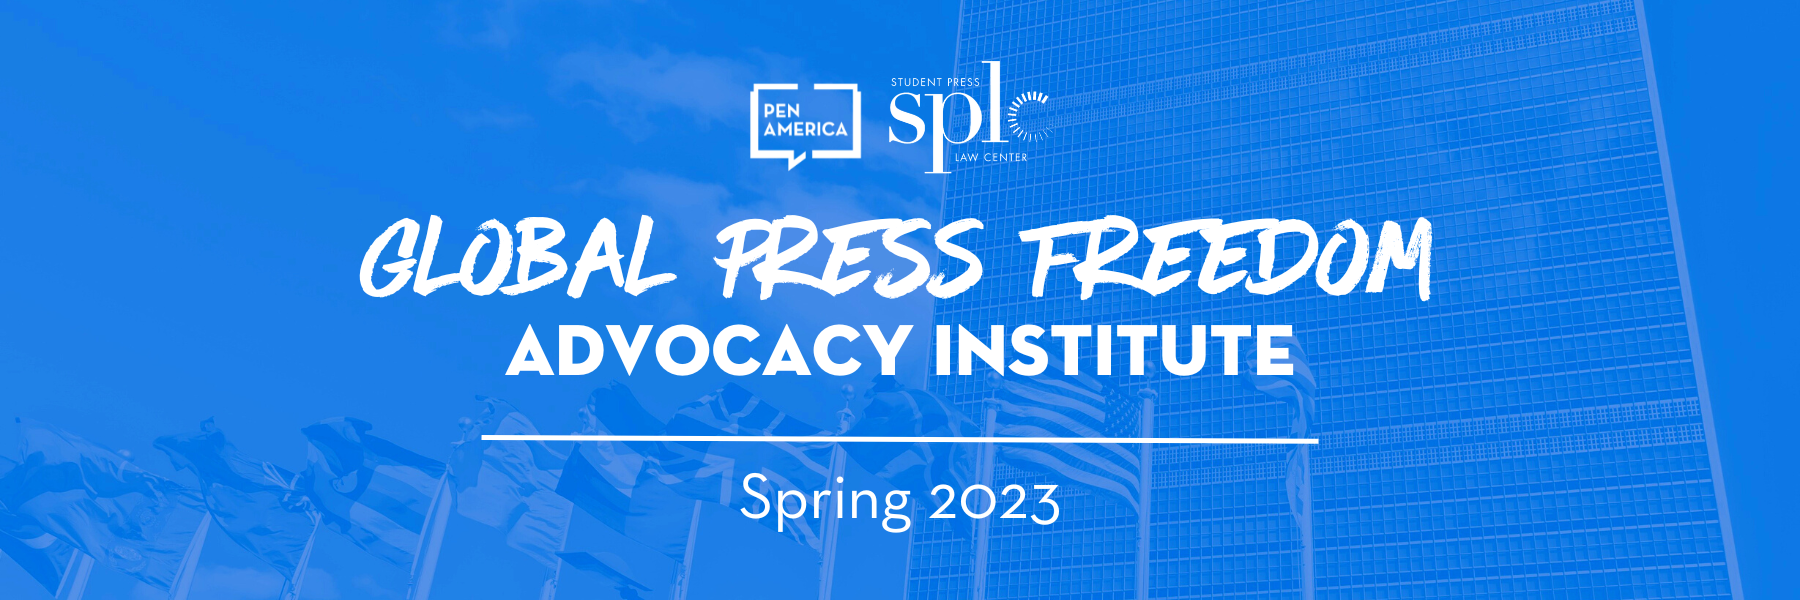 Global Press Freedom Advocacy Institute - Spring 2023 Hero Image